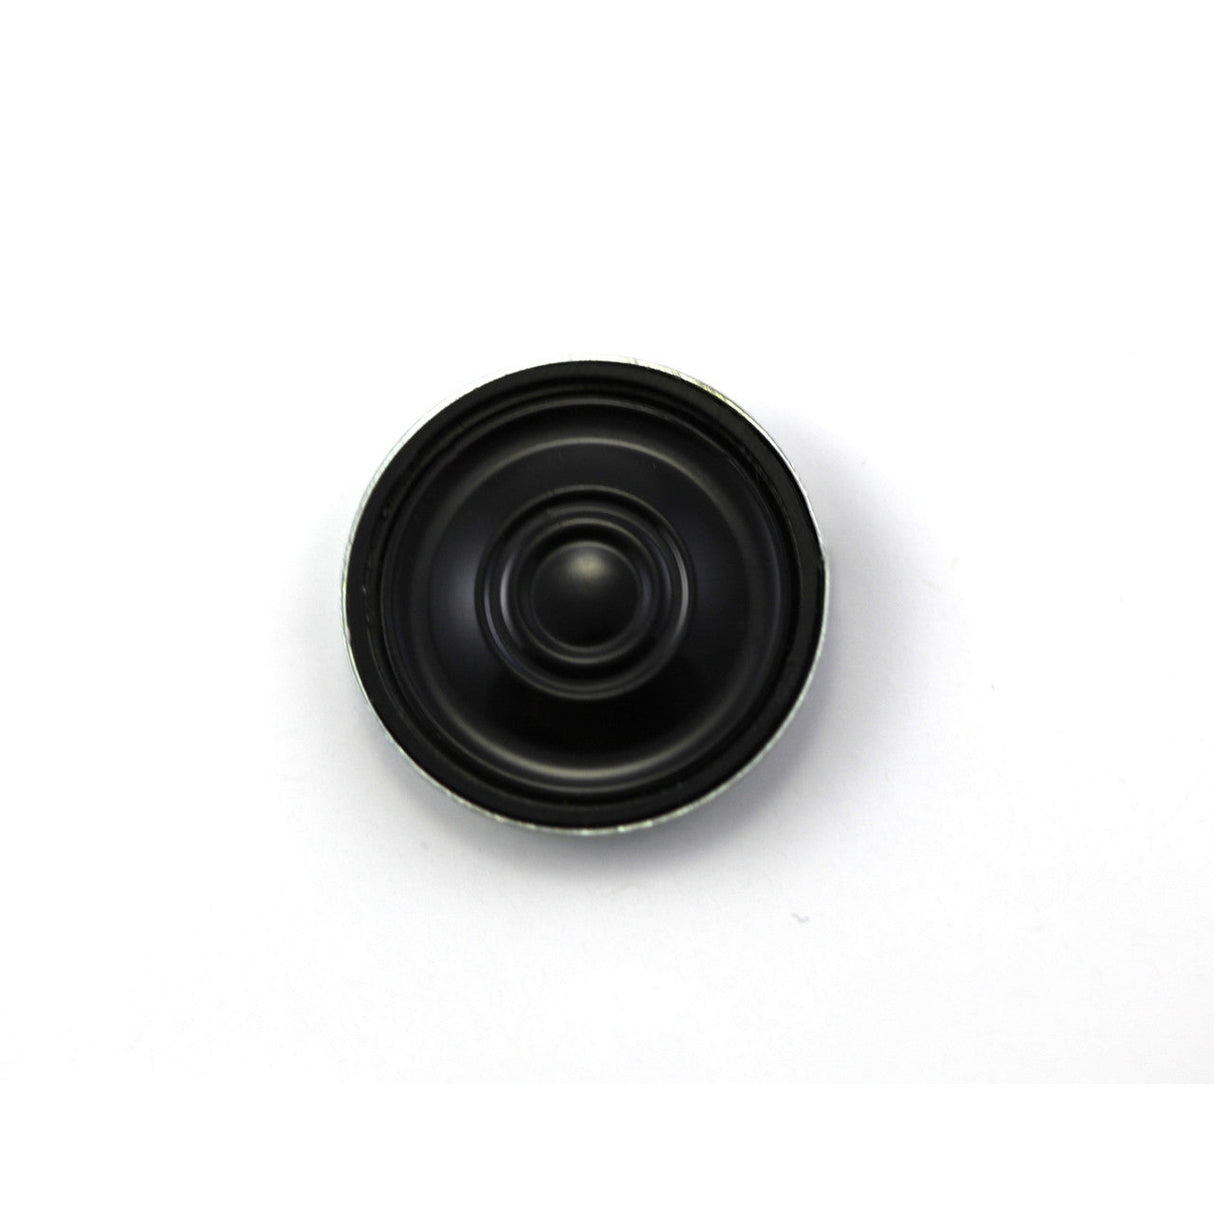 Soundtraxx 28mm round, 2 Watt, 8-ohm speaker